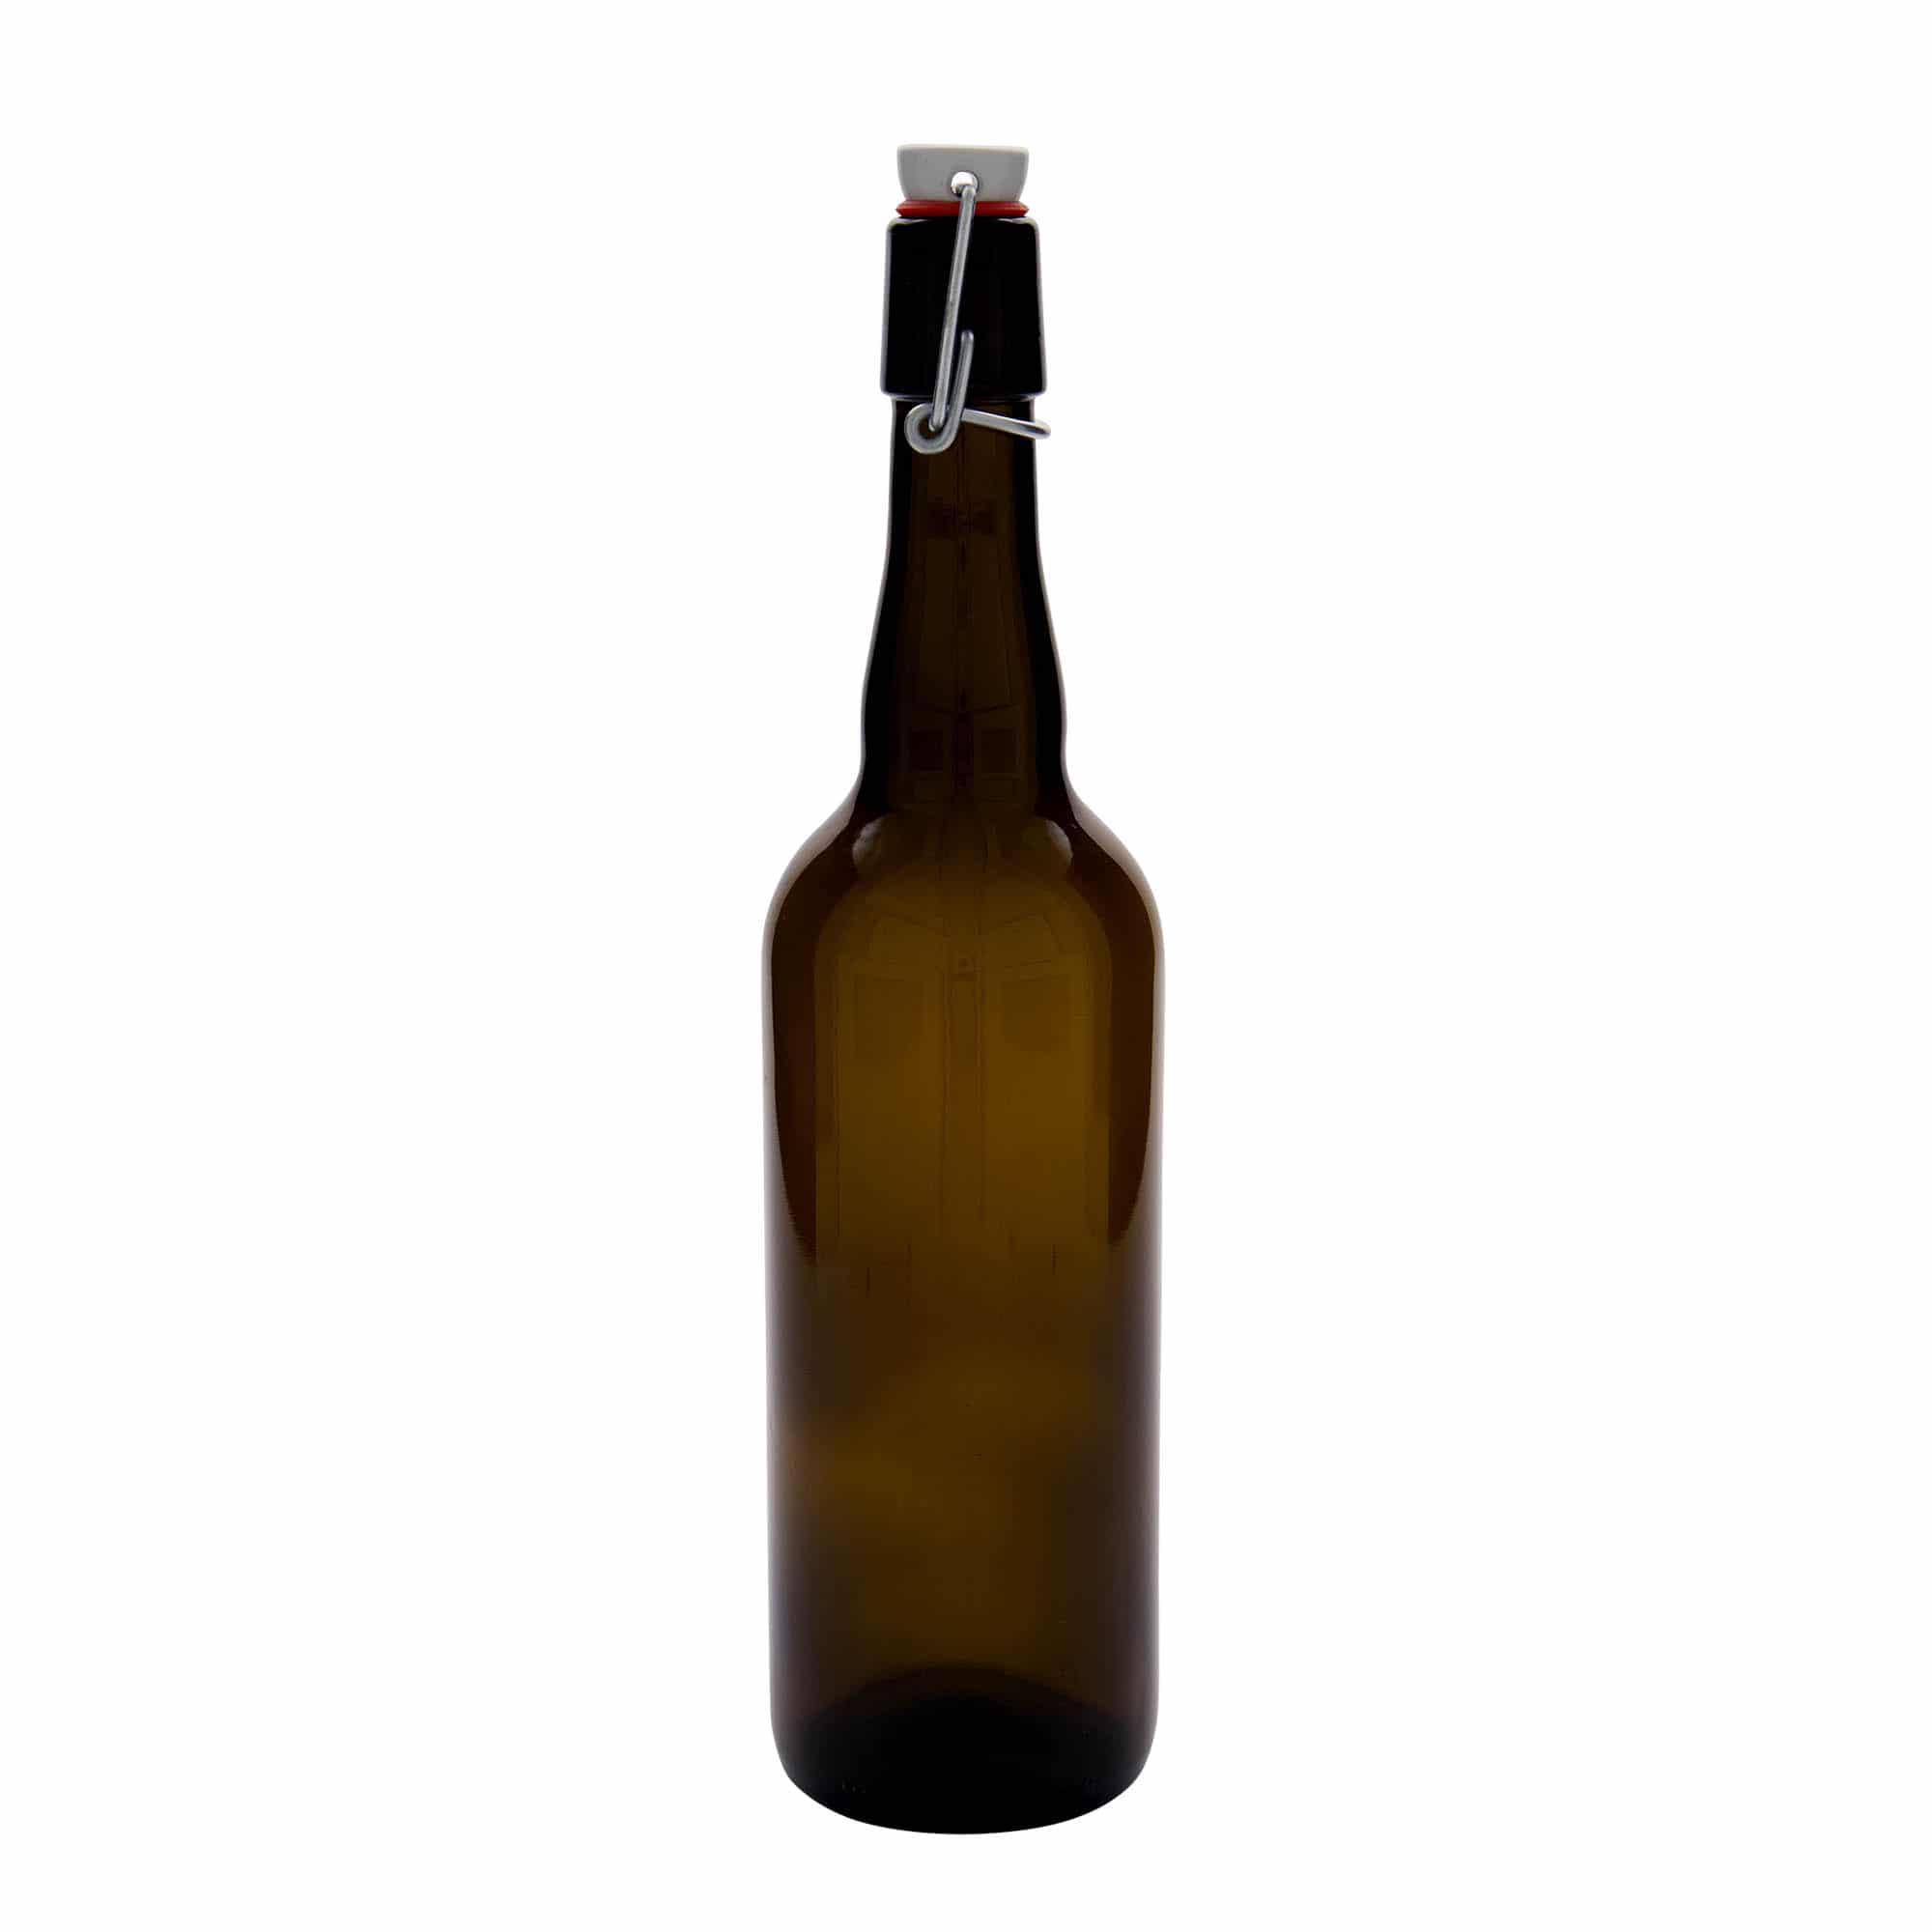 Bierflesje België, 750 ml, glas, bruin, monding: beugelsluiting